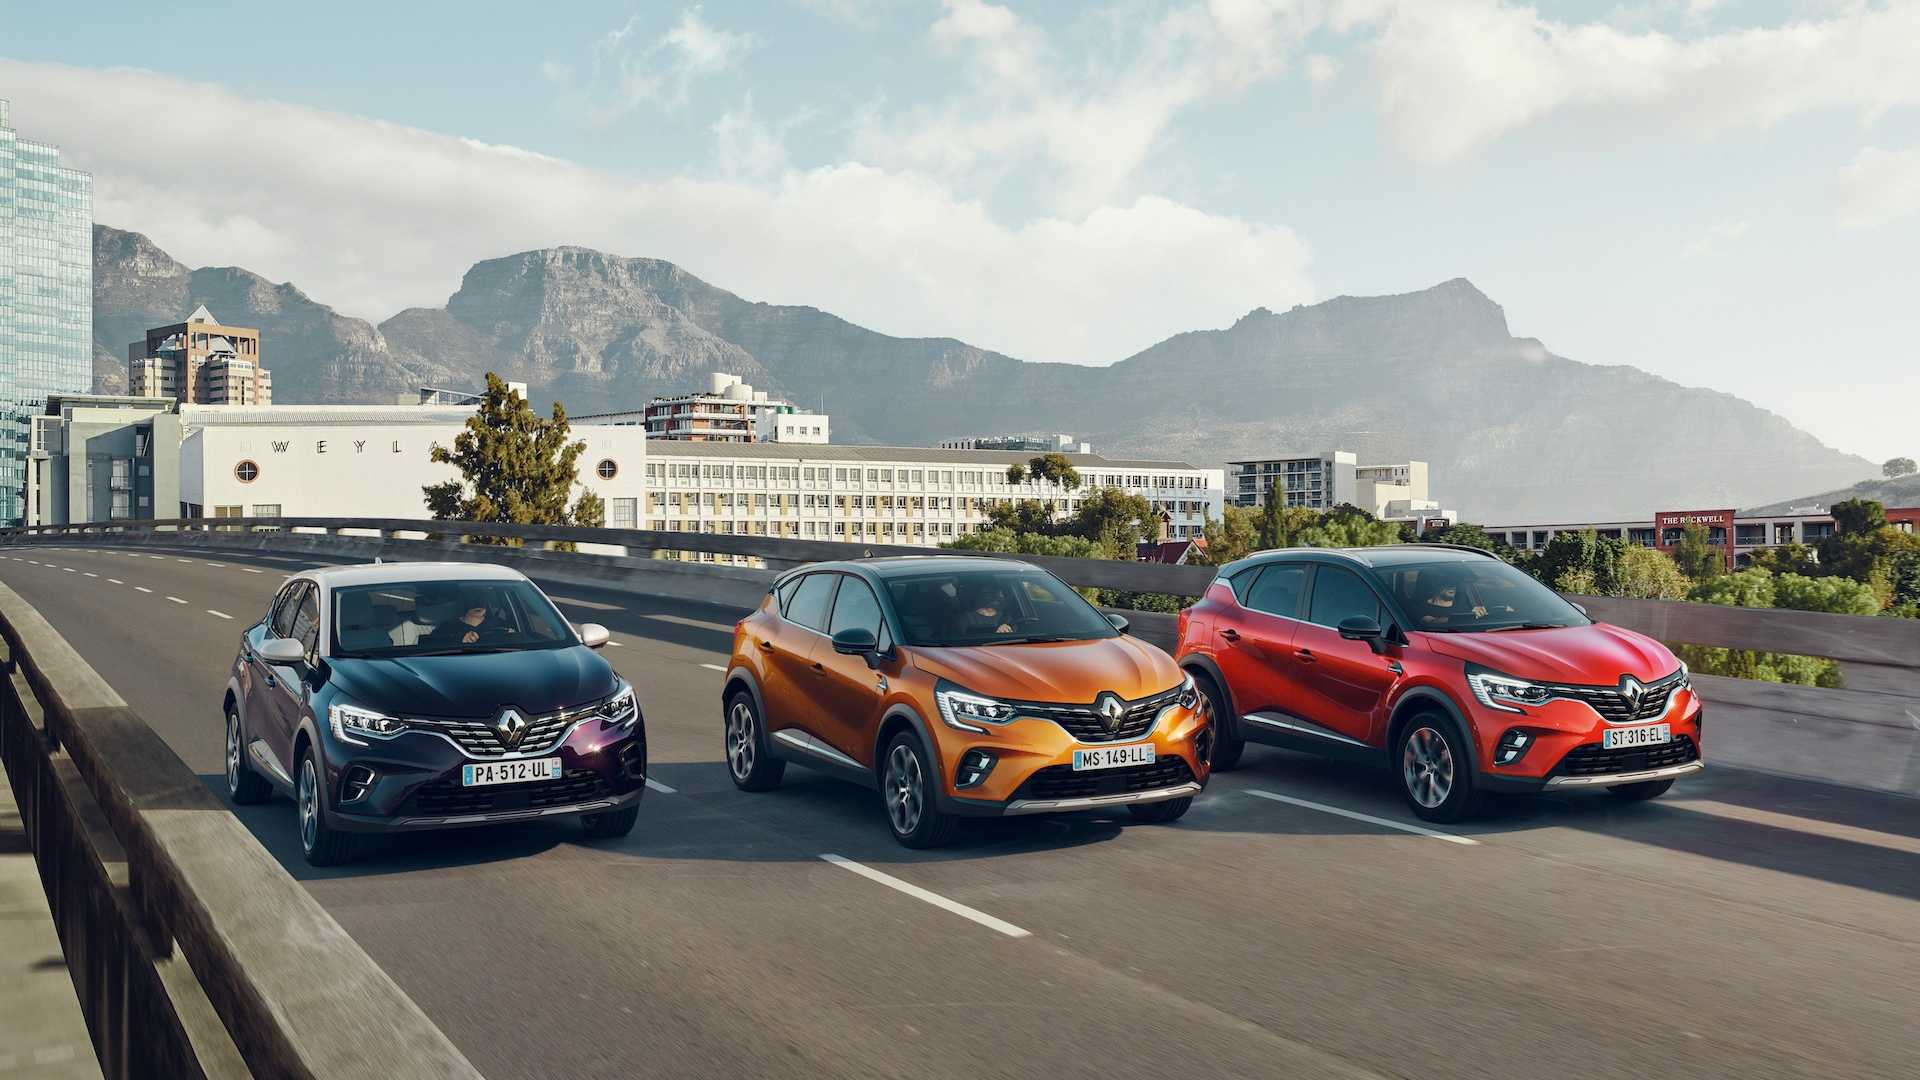 All-New Renault Captur